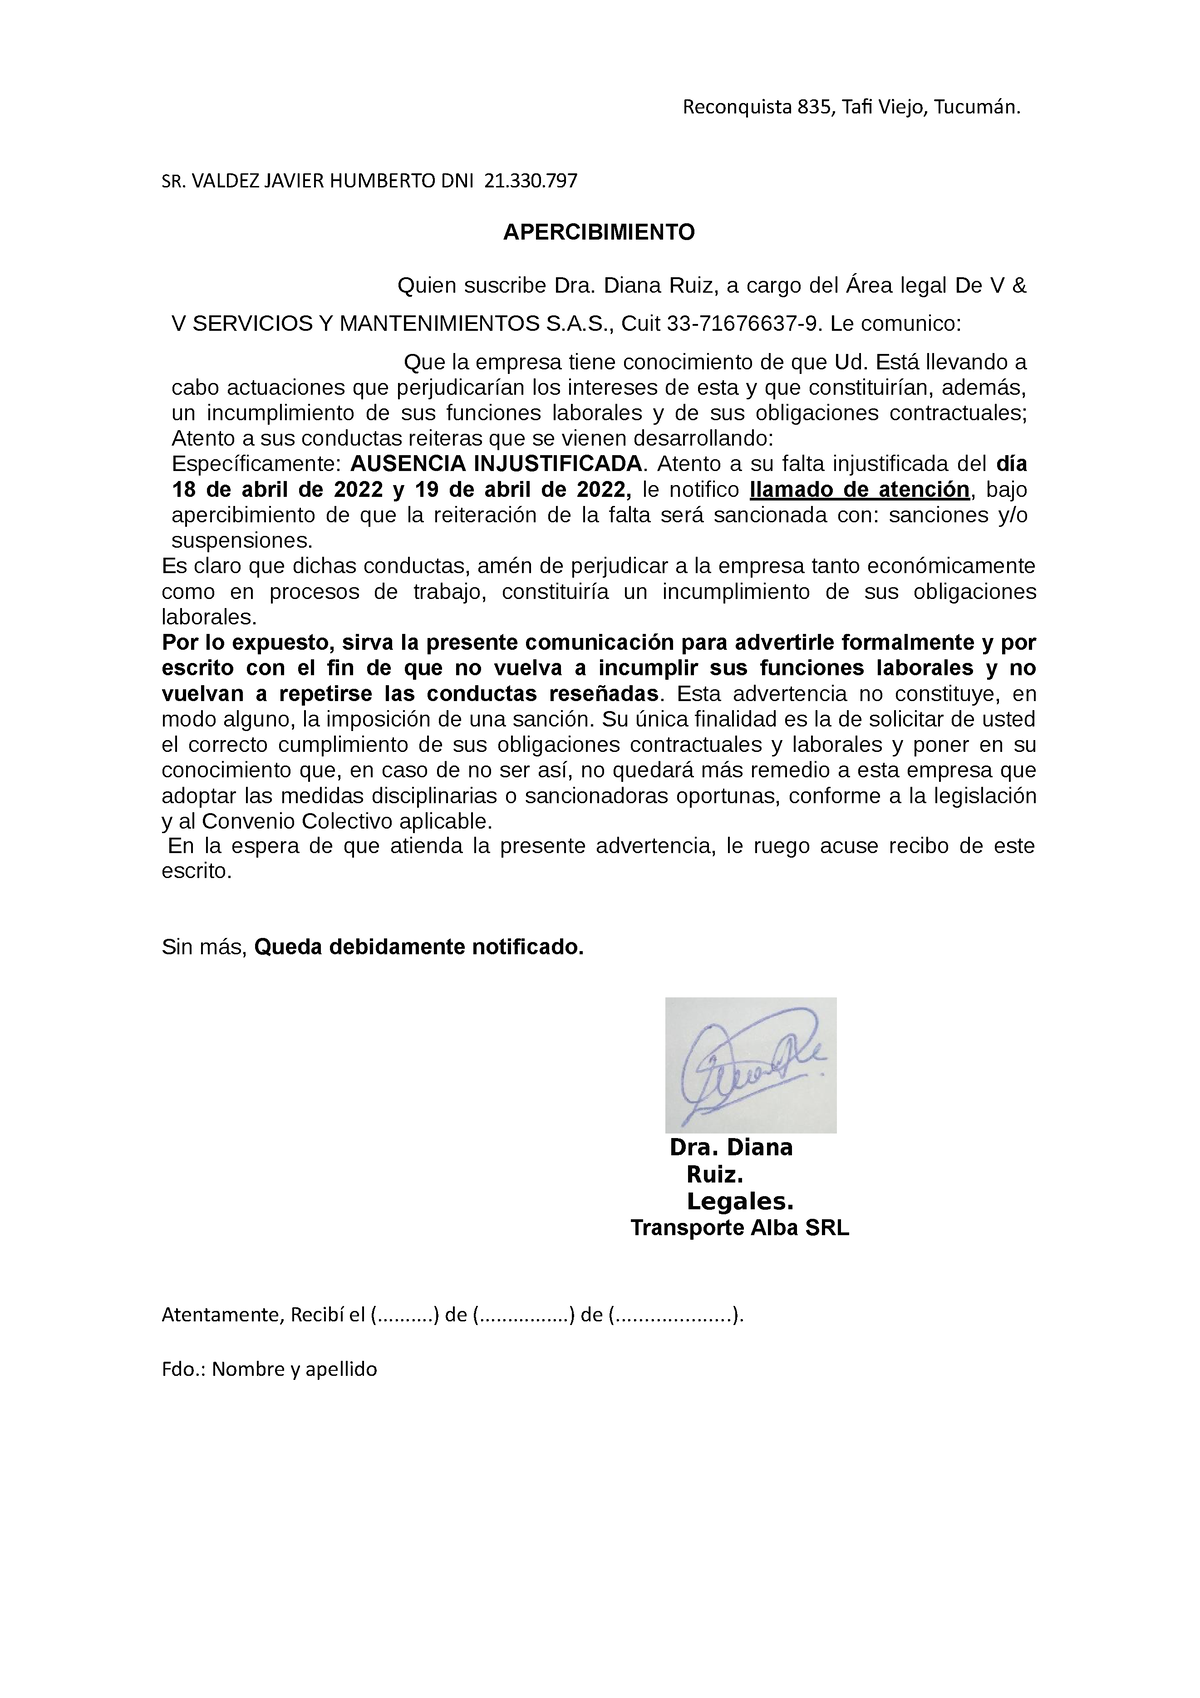 Carta apercibimiento v&v - Reconquista 835, Tafi Viejo, Tucumán. SR. VALDEZ  JAVIER HUMBERTO DNI 21. - Studocu